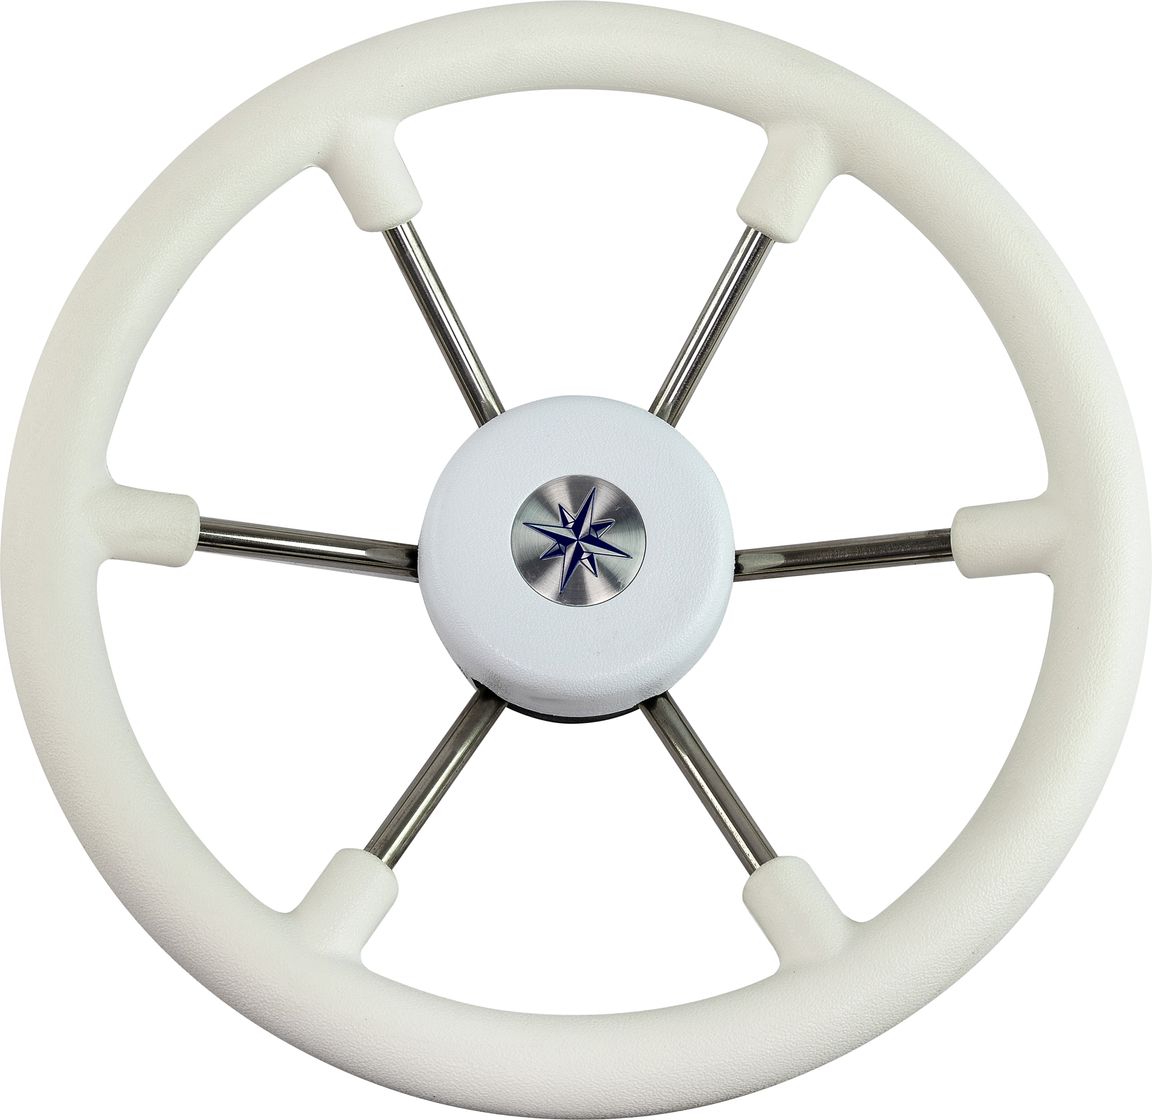 Рулевое колесо LEADER TANEGUM белый обод серебряные спицы д. 330 мм VN7330-08 рулевое колесо leader plast обод серебряные спицы д 360 мм vn8360 01